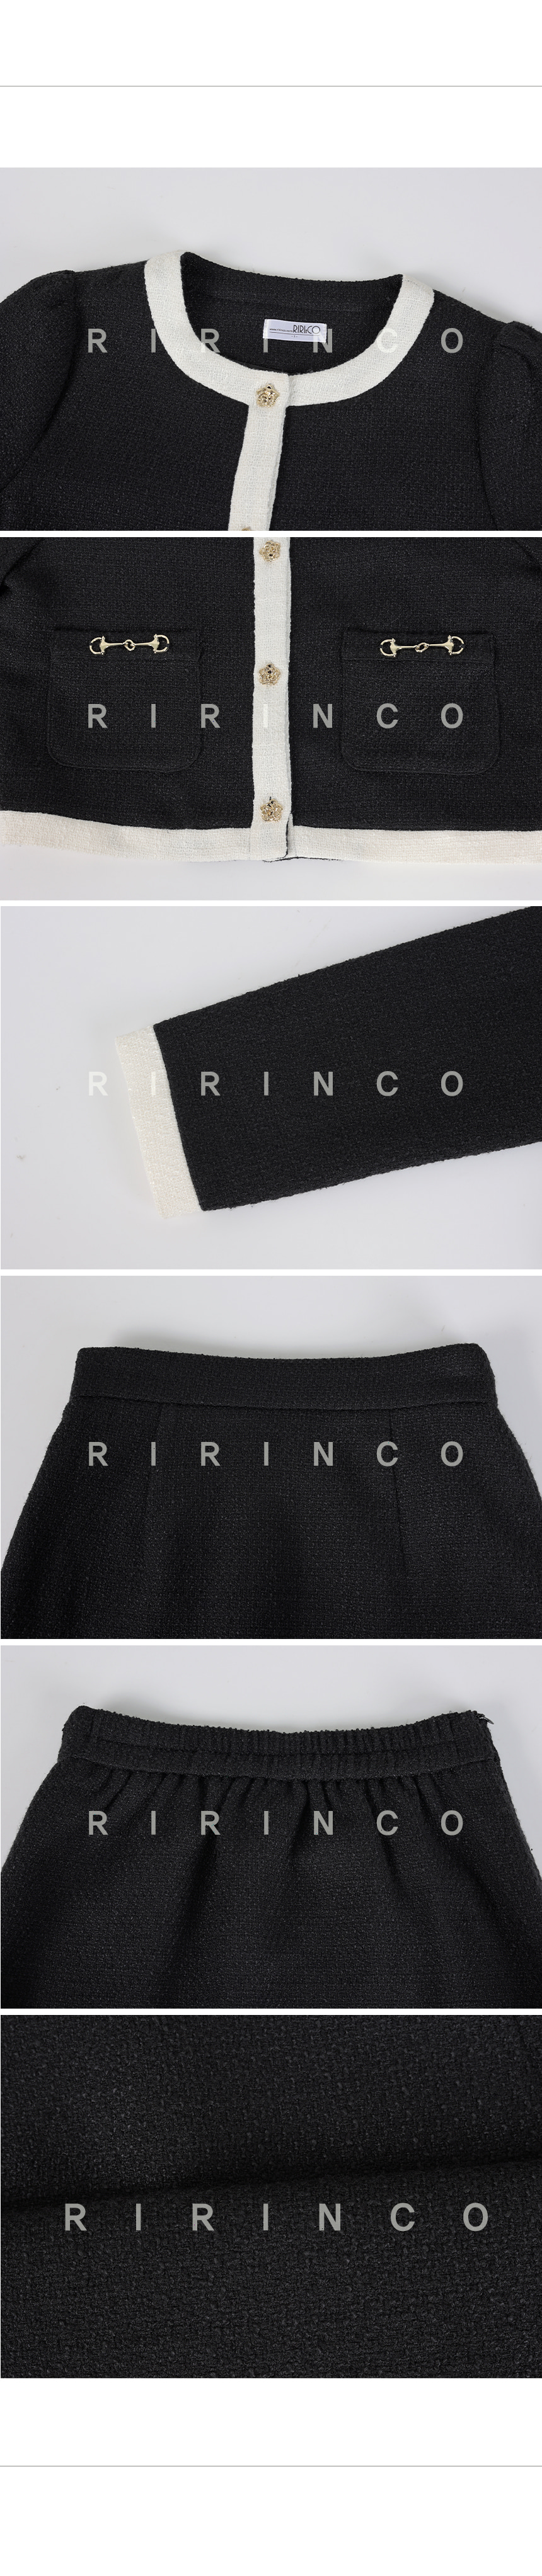 RIRINCO 配色ツイードジャケット&ミニスカート上下セット